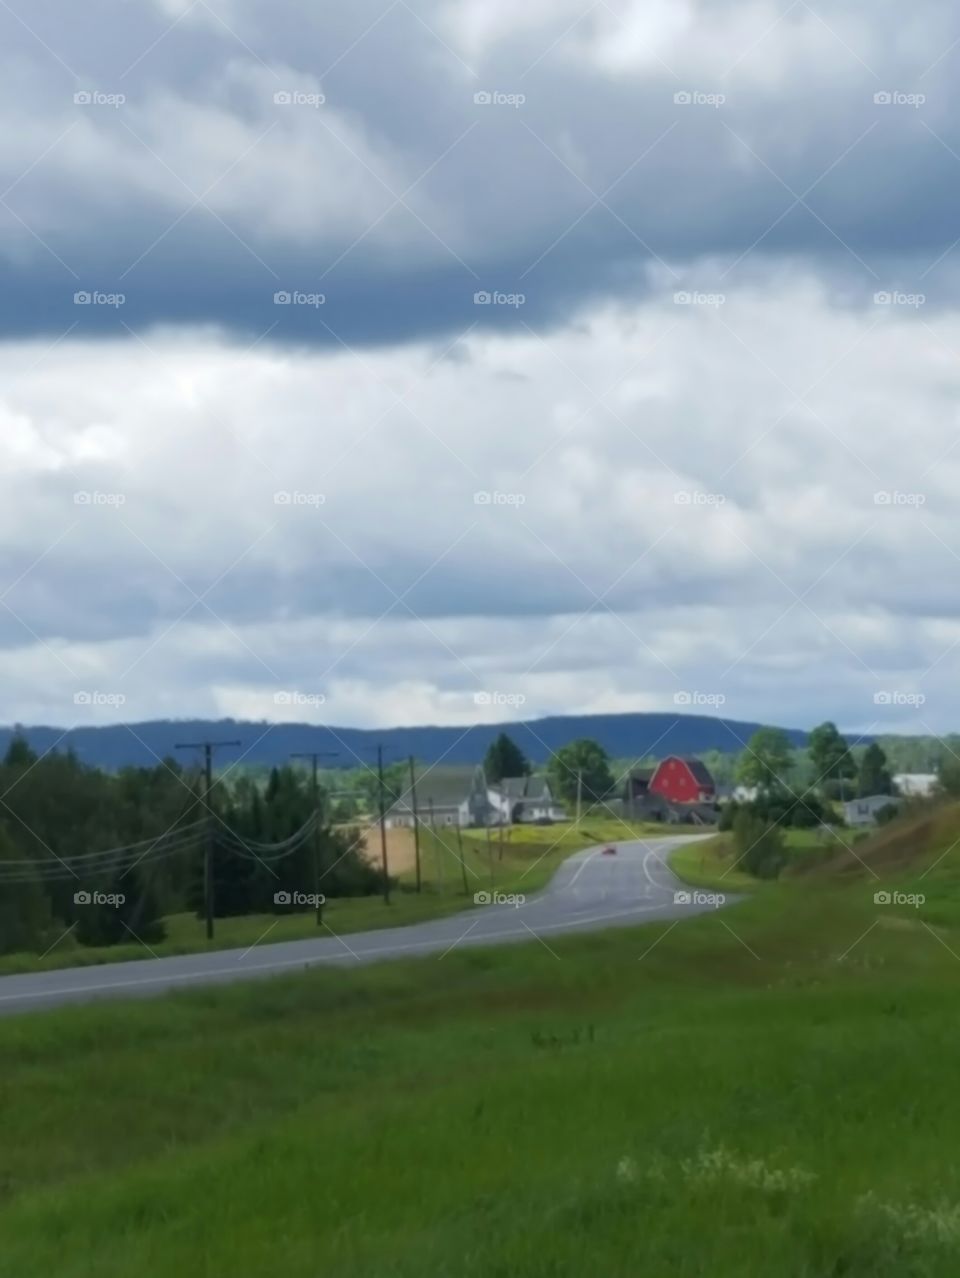 Northern Maine